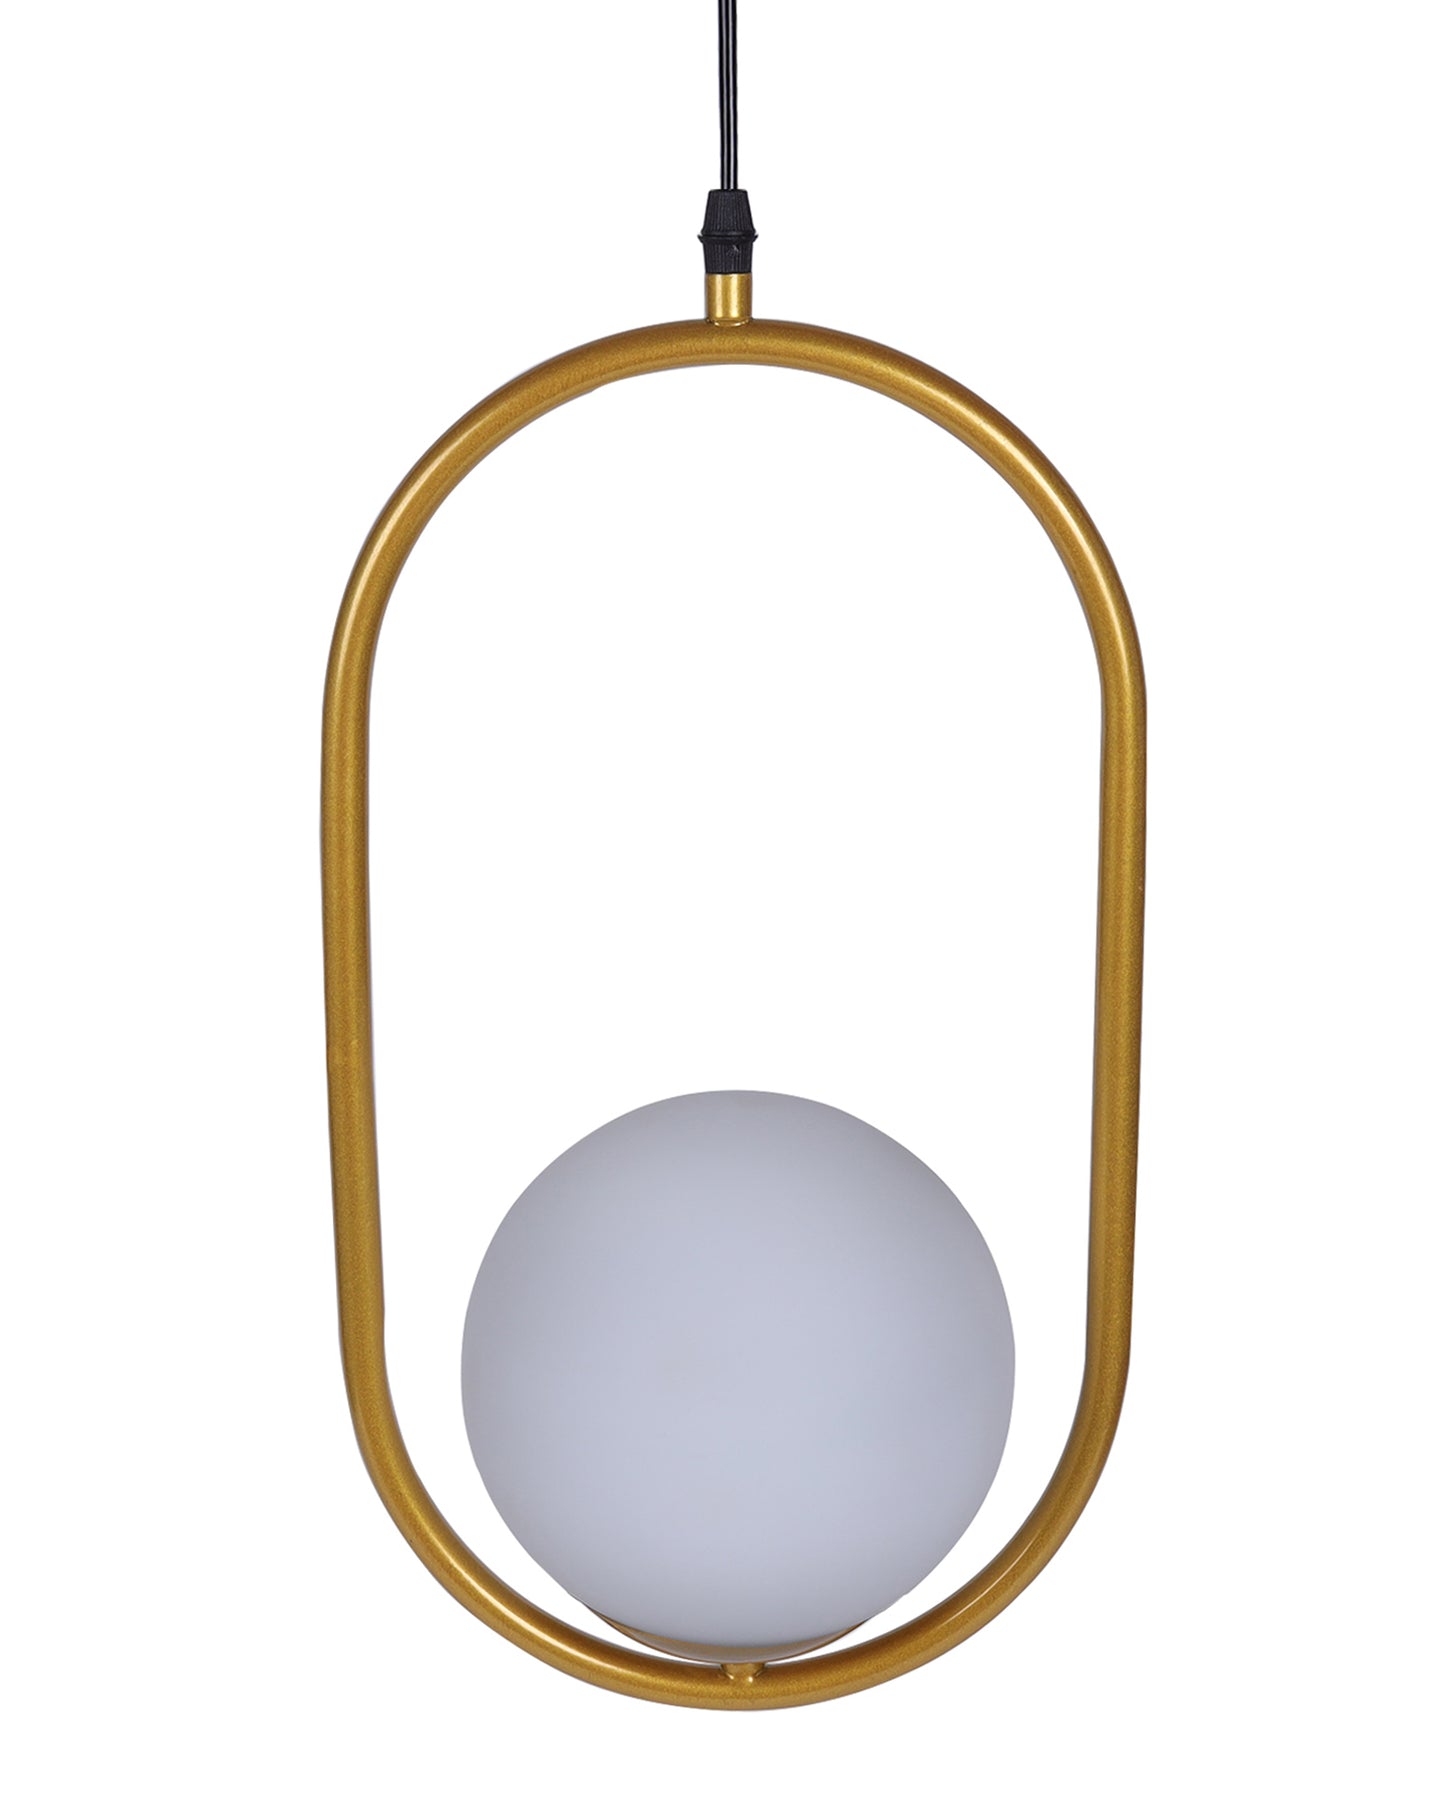 Mid Century Modern Light Chandelier Lighting, White Frosted Glass Globe Lampshade Pendant Indoor Hanging Light Fixture, Golden Oval